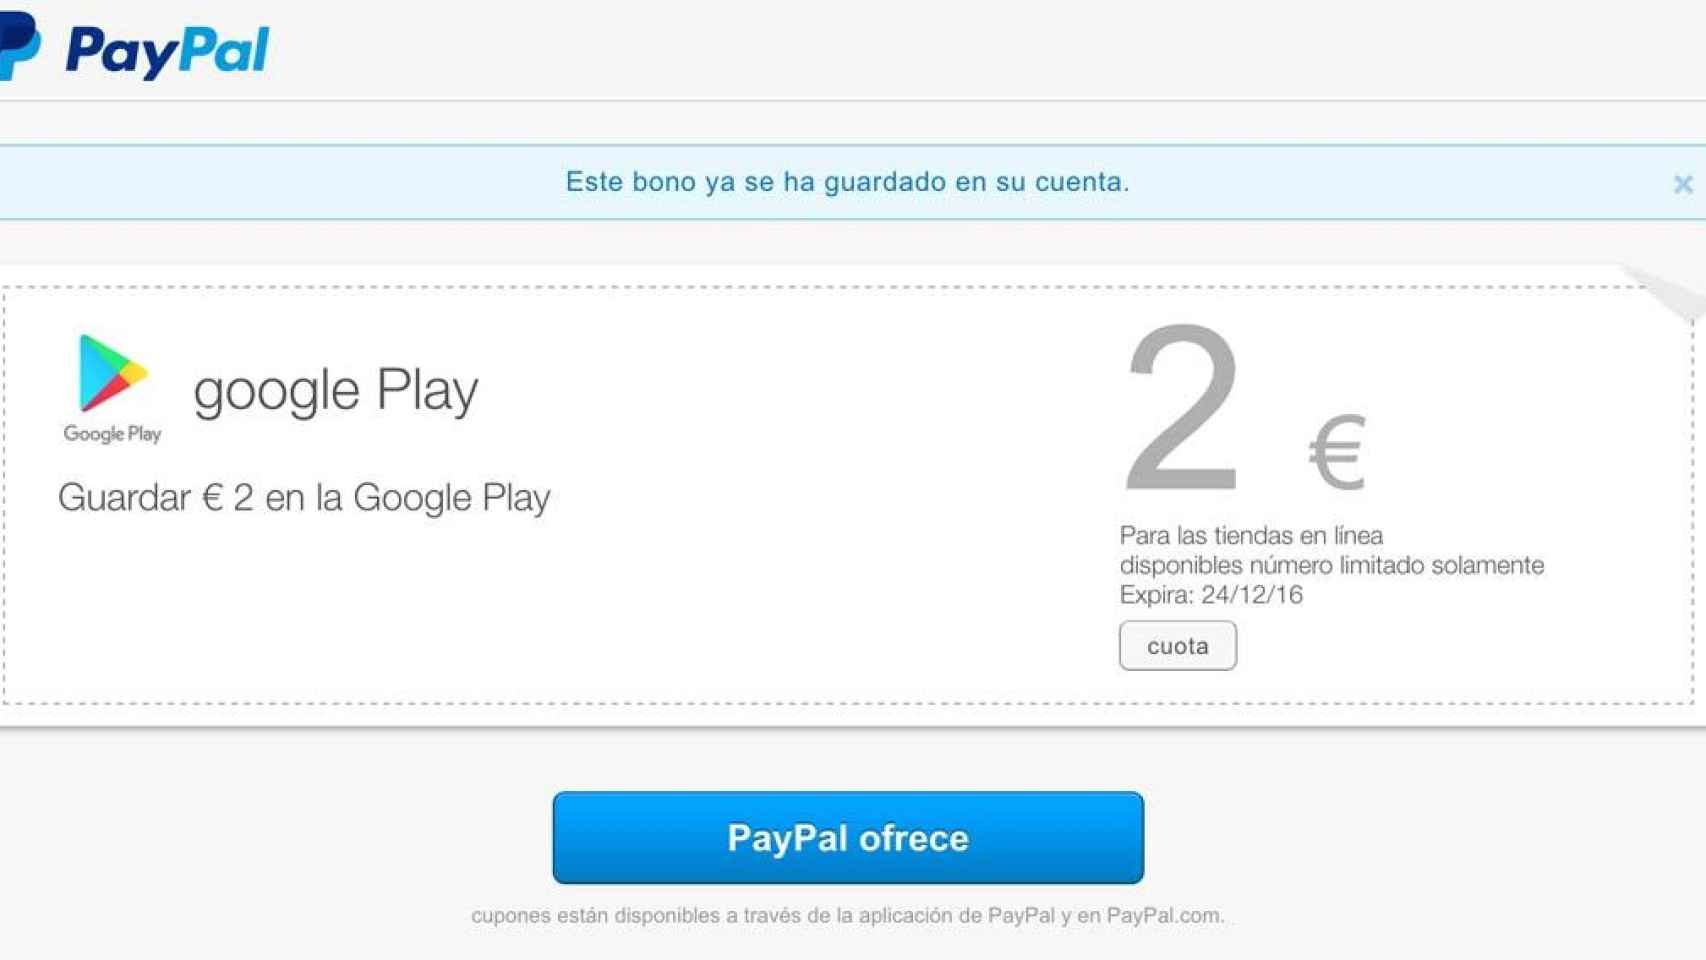 Consigue 2 euros gratis para aplicaciones gracias a PayPal